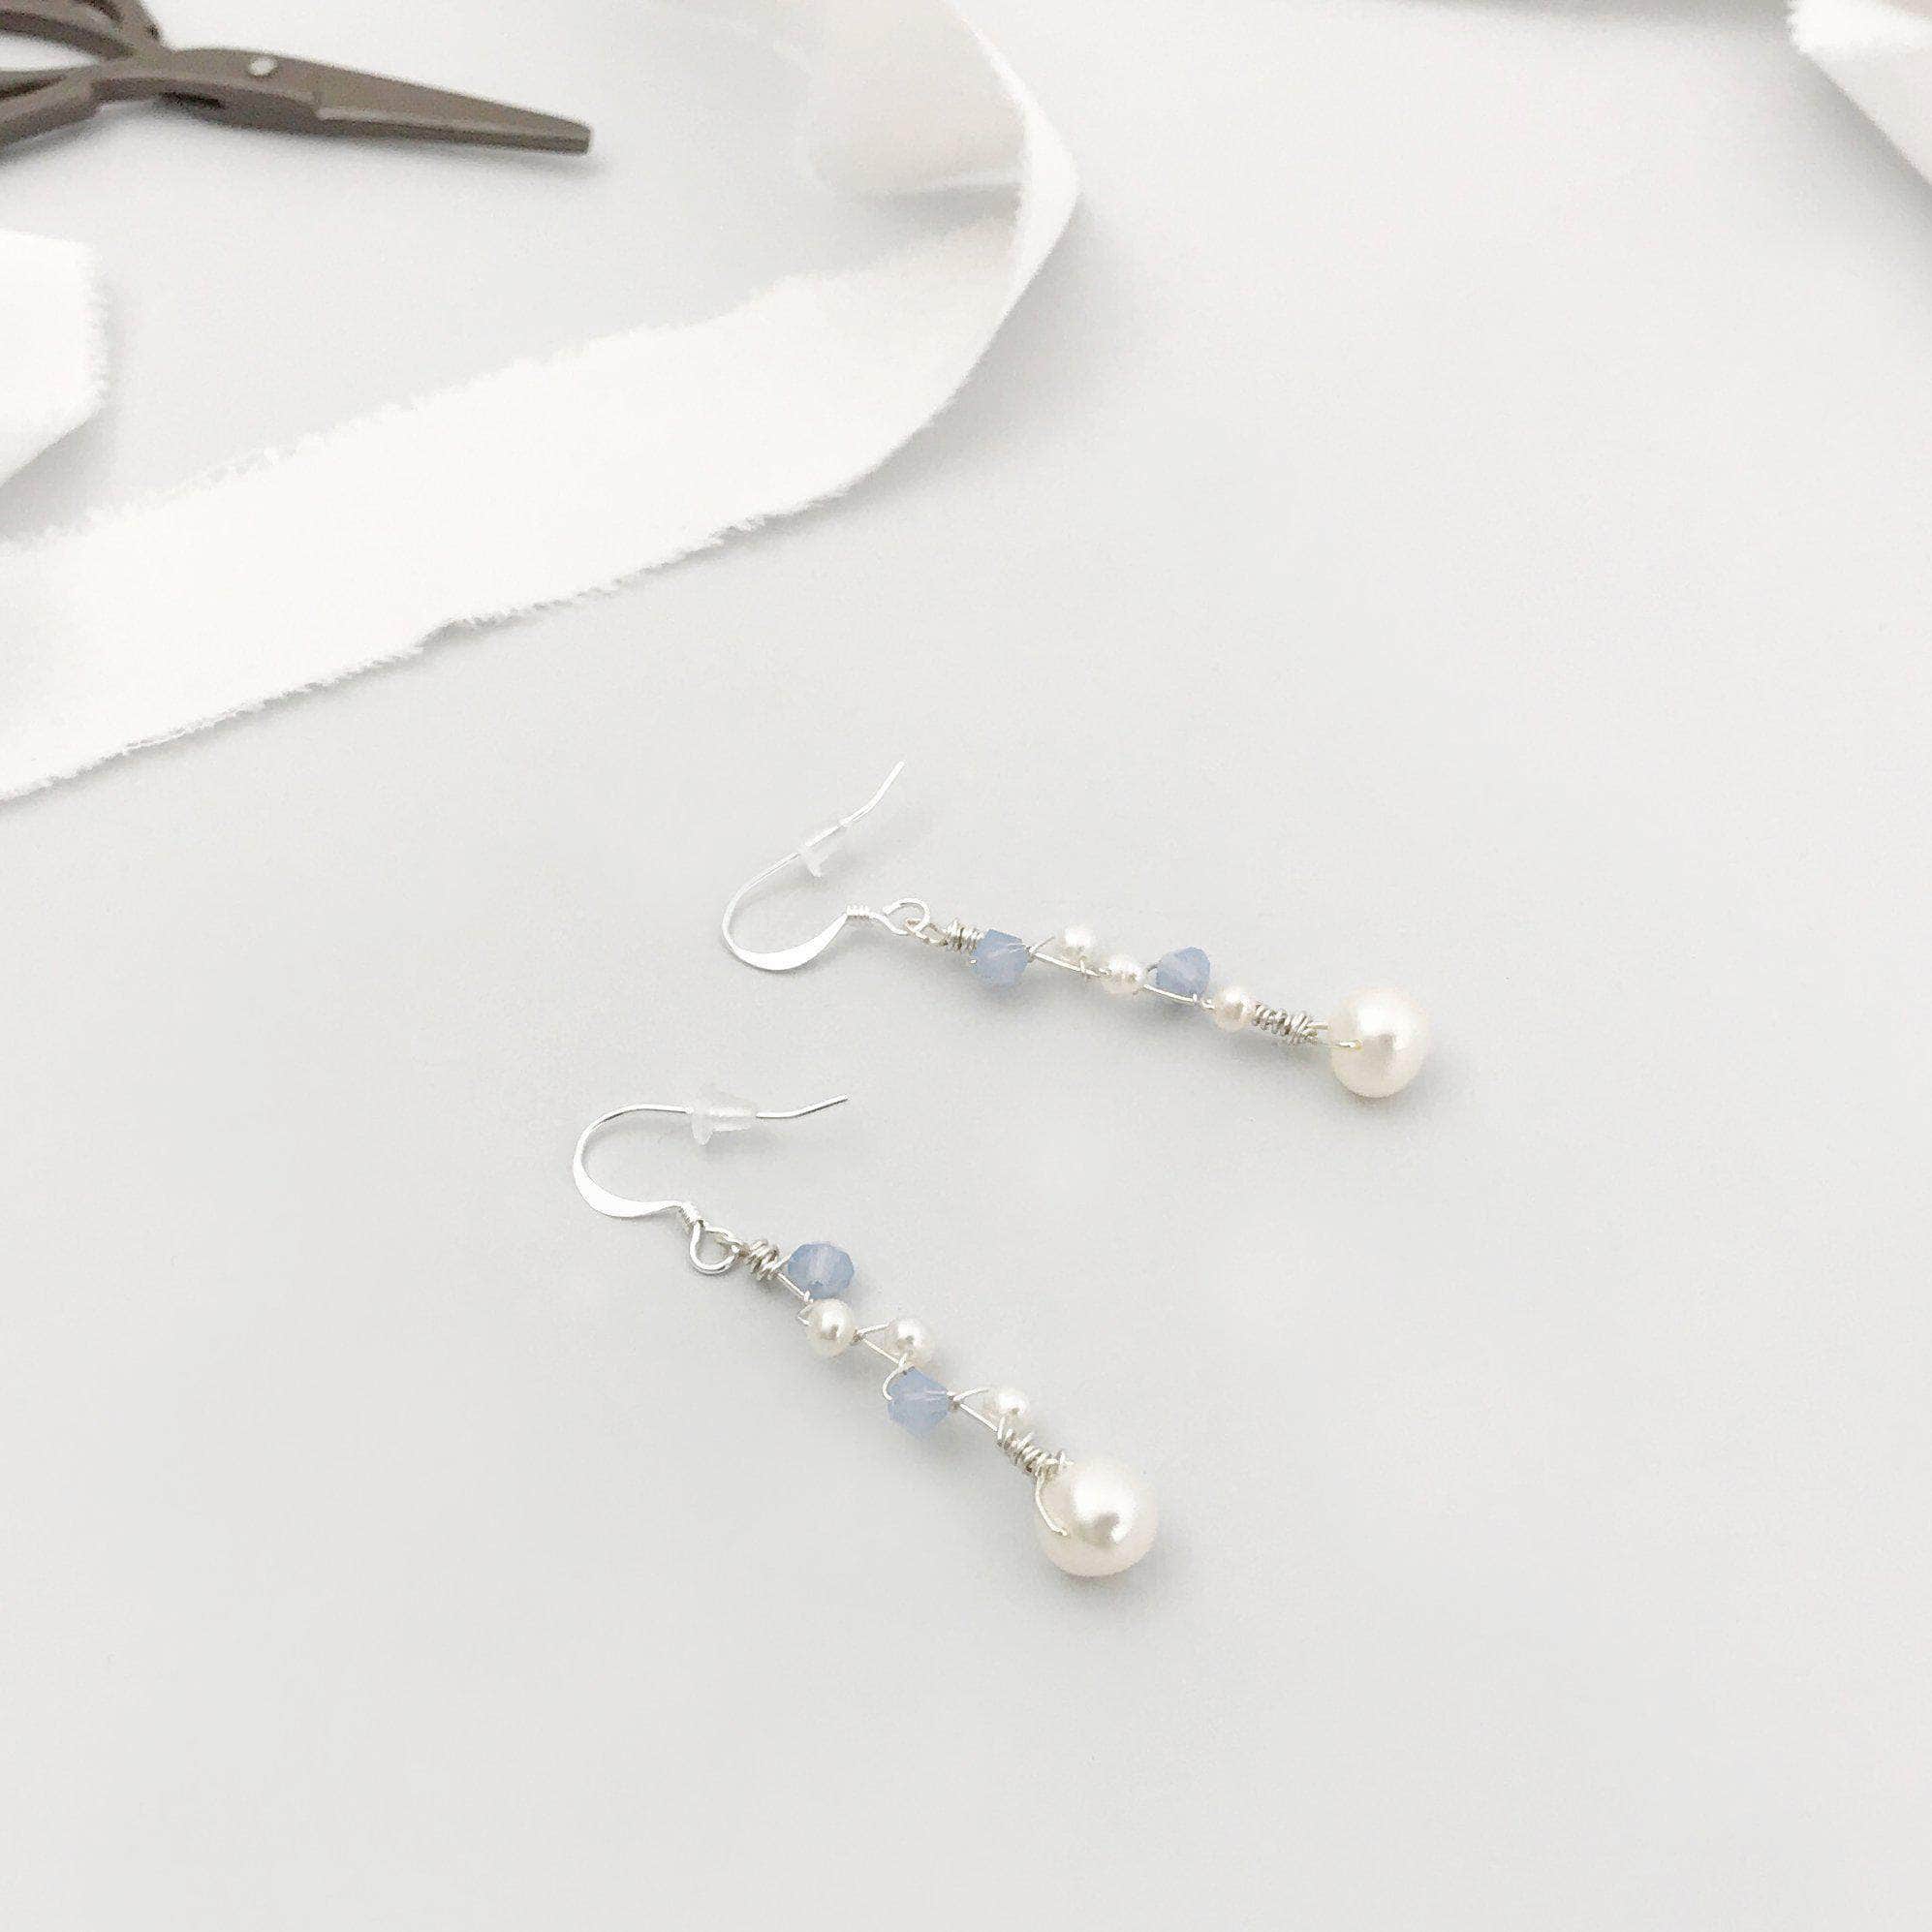 Wedding Earring Silverblue Silver wedding earrings of blue opal and freshwater pearl - 'Addie'